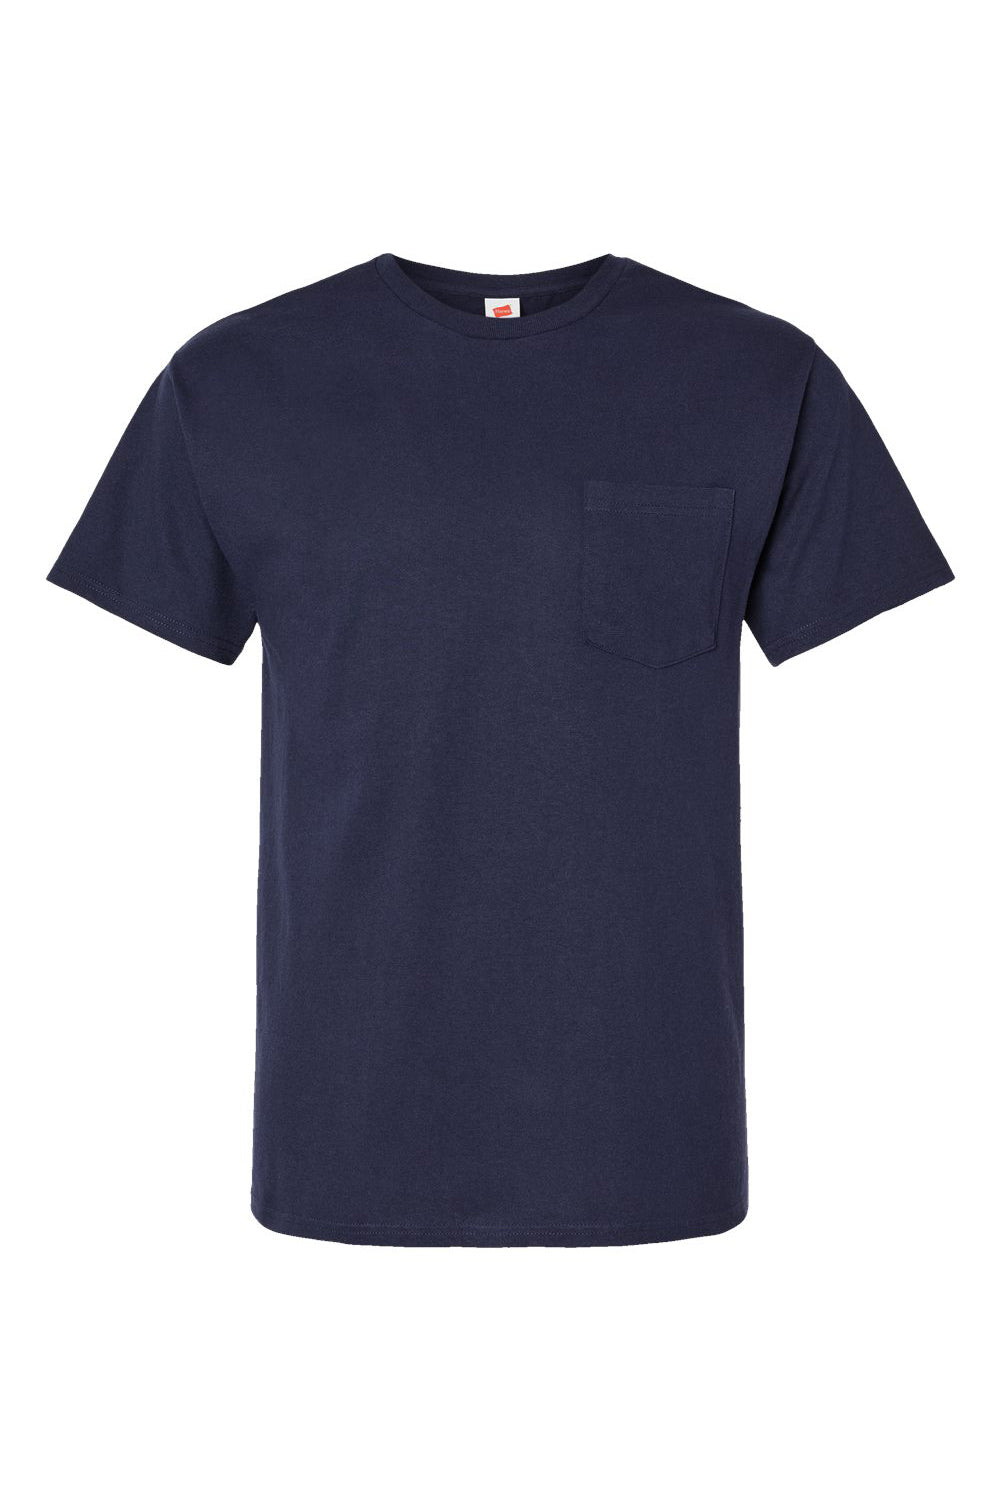 Hanes 5290P Mens Essential Short Sleeve Crewneck T-Shirt w/ Pocket Athletic Navy Blue Flat Front